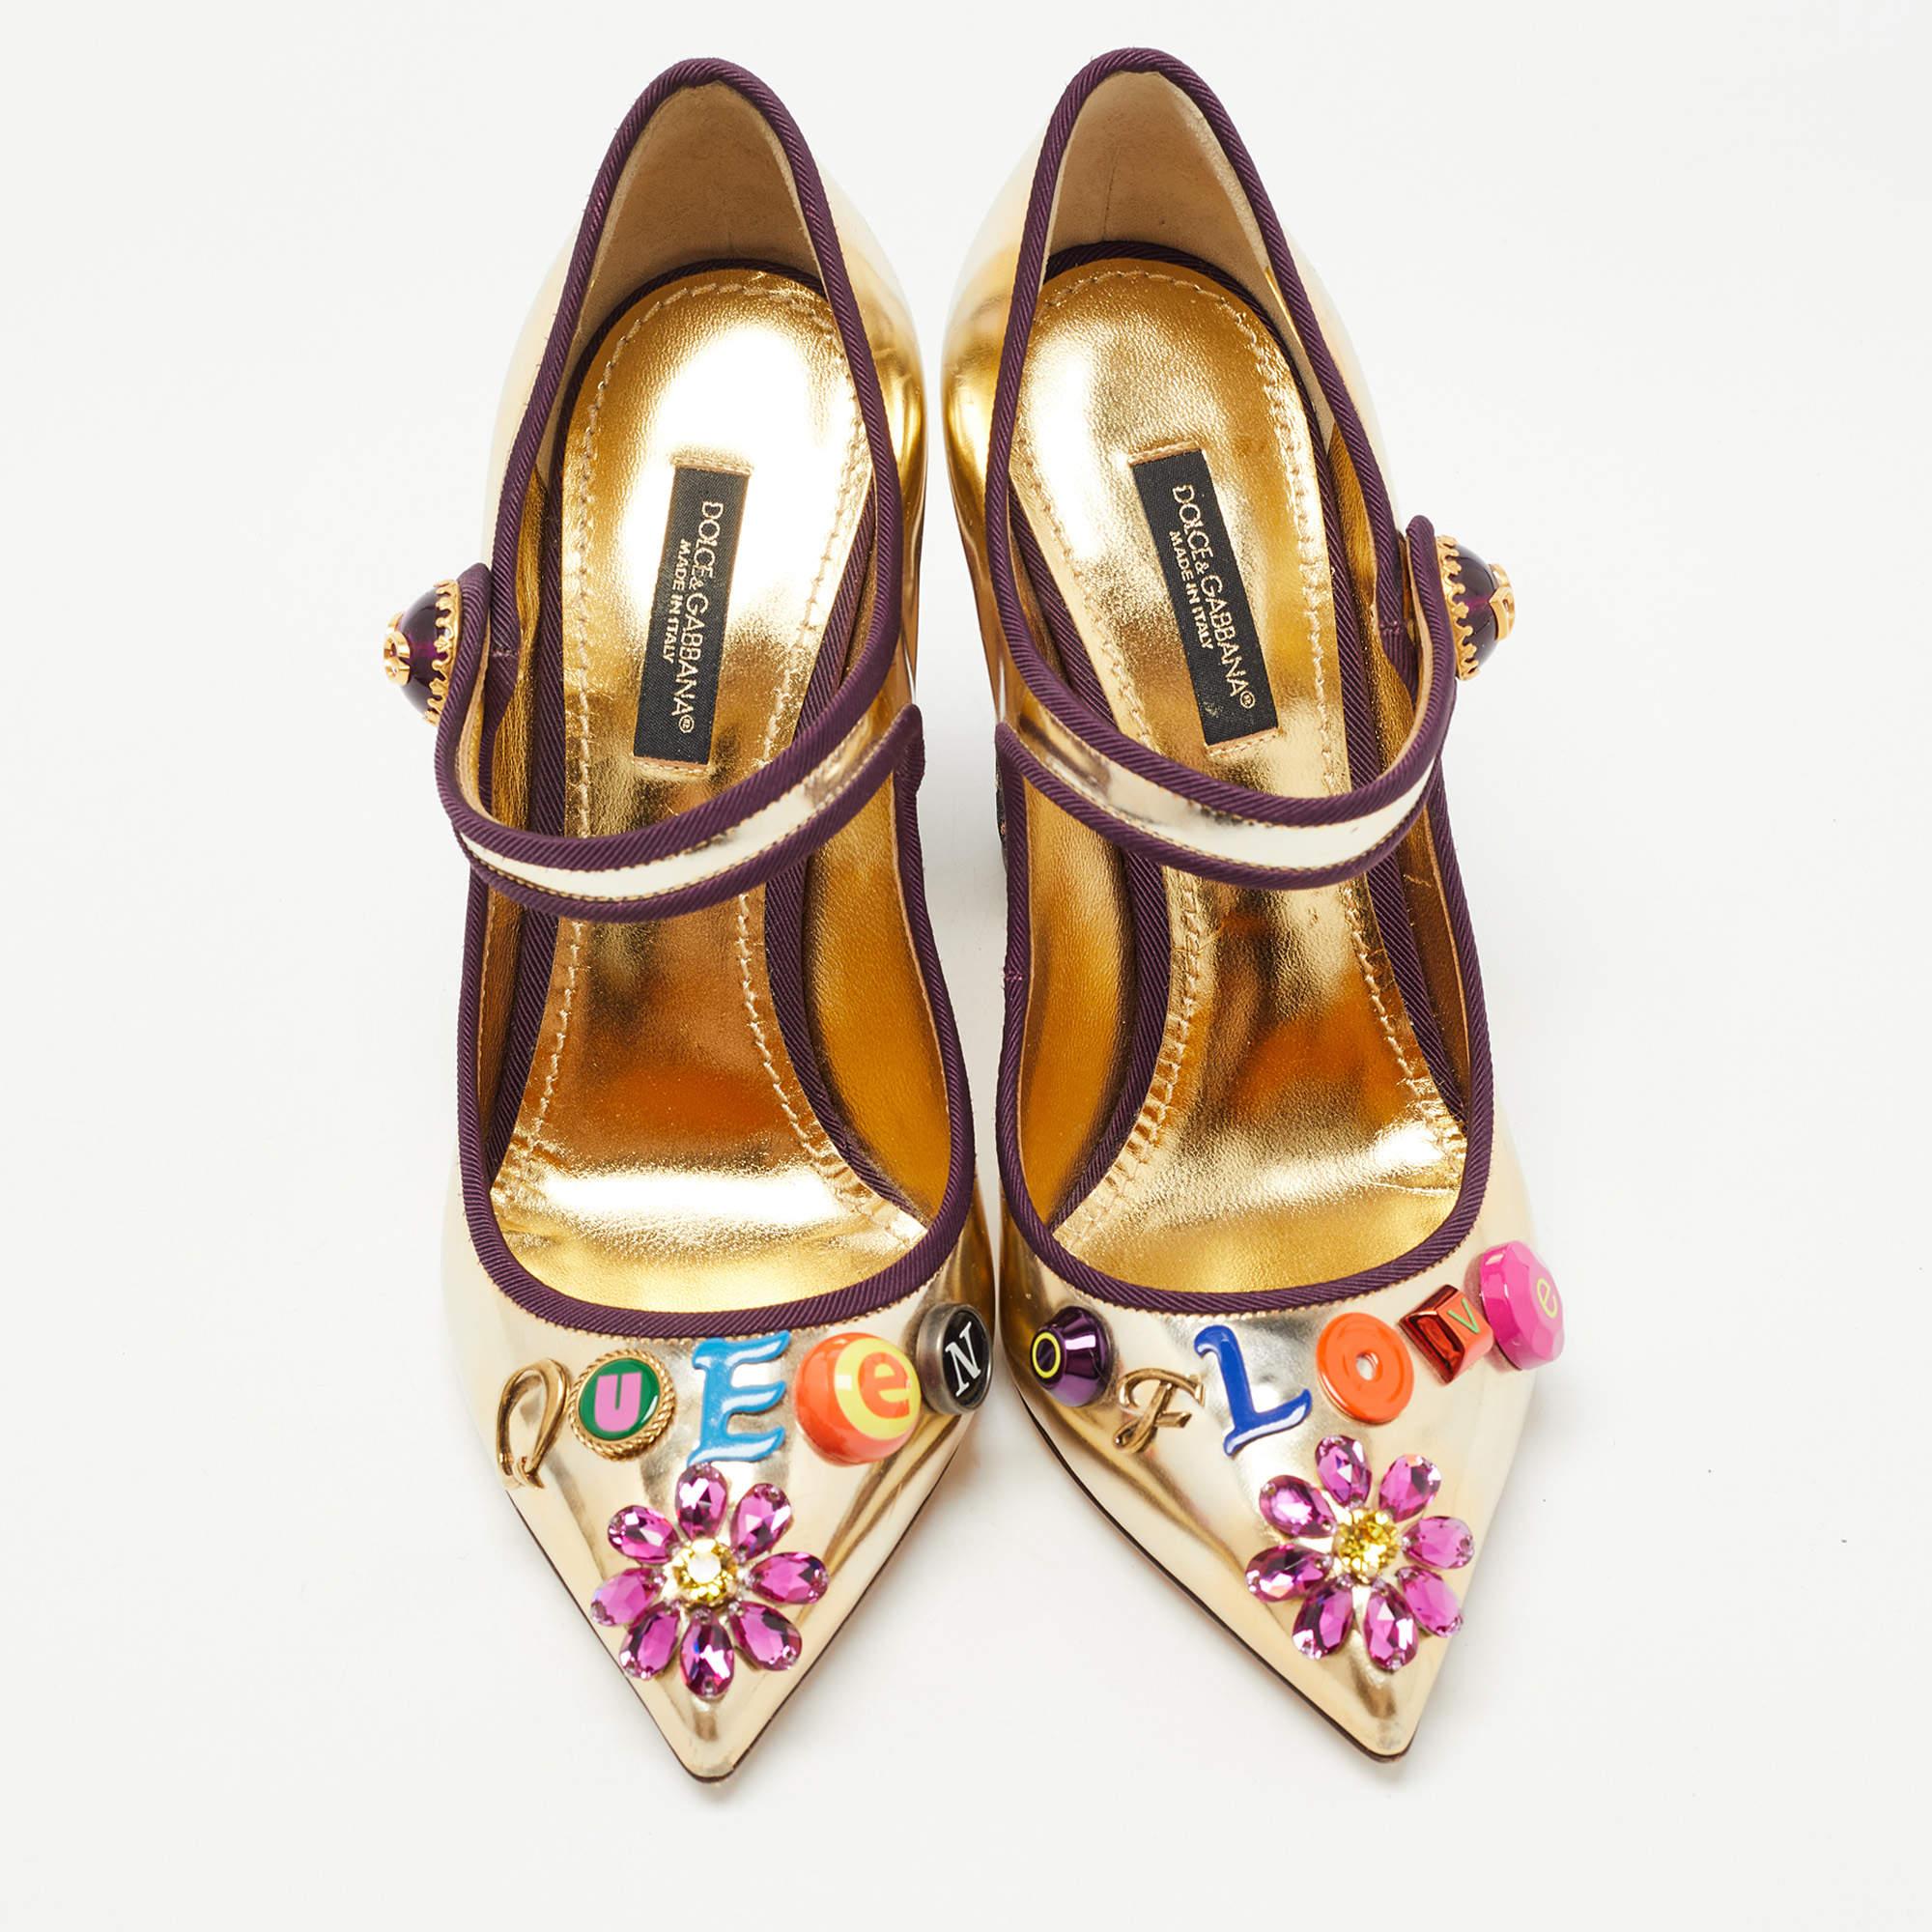 Dolce & Gabbana Gold Leather Embellished Mary Jane Pumps Size 36 2